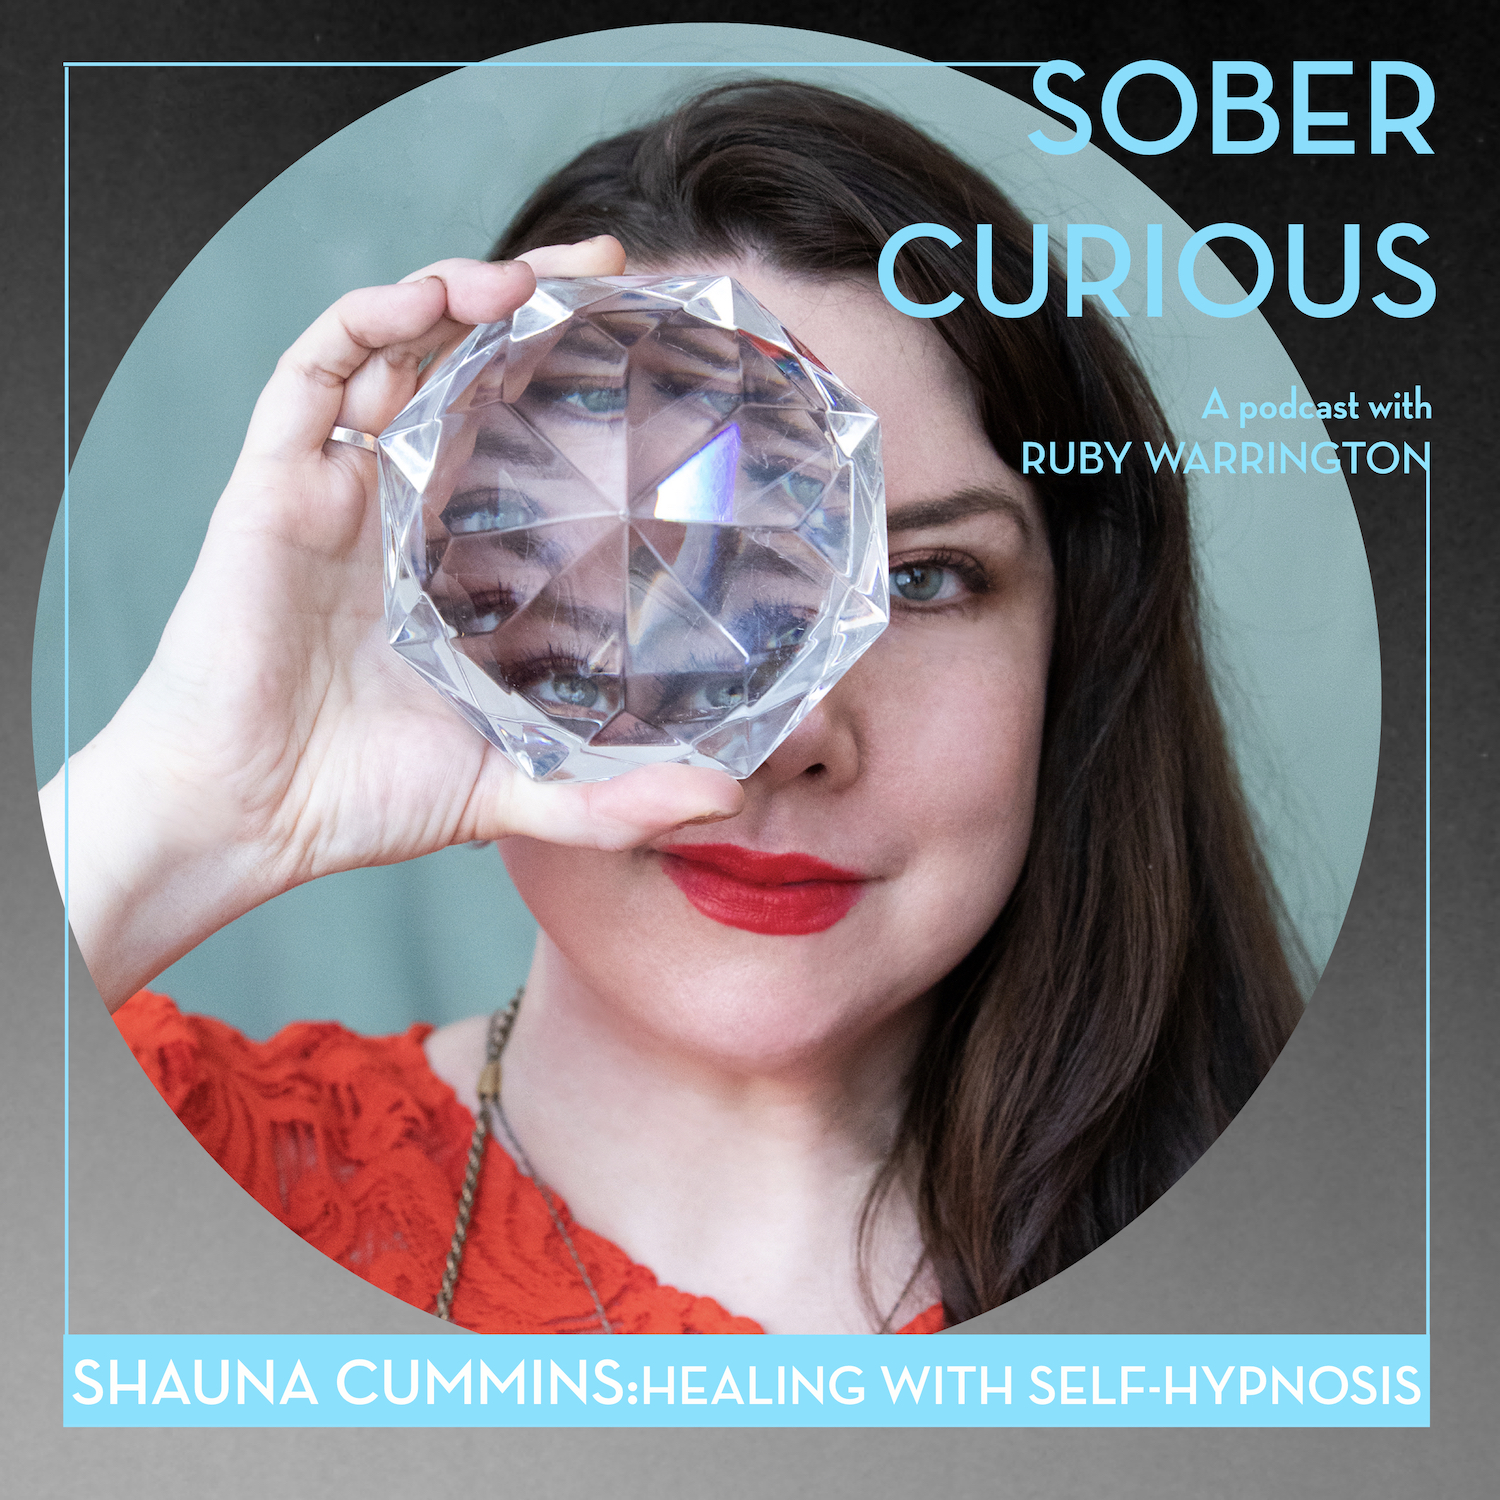 Shauna Cummins Sober Curious podcast self-hypnosis wishcraft